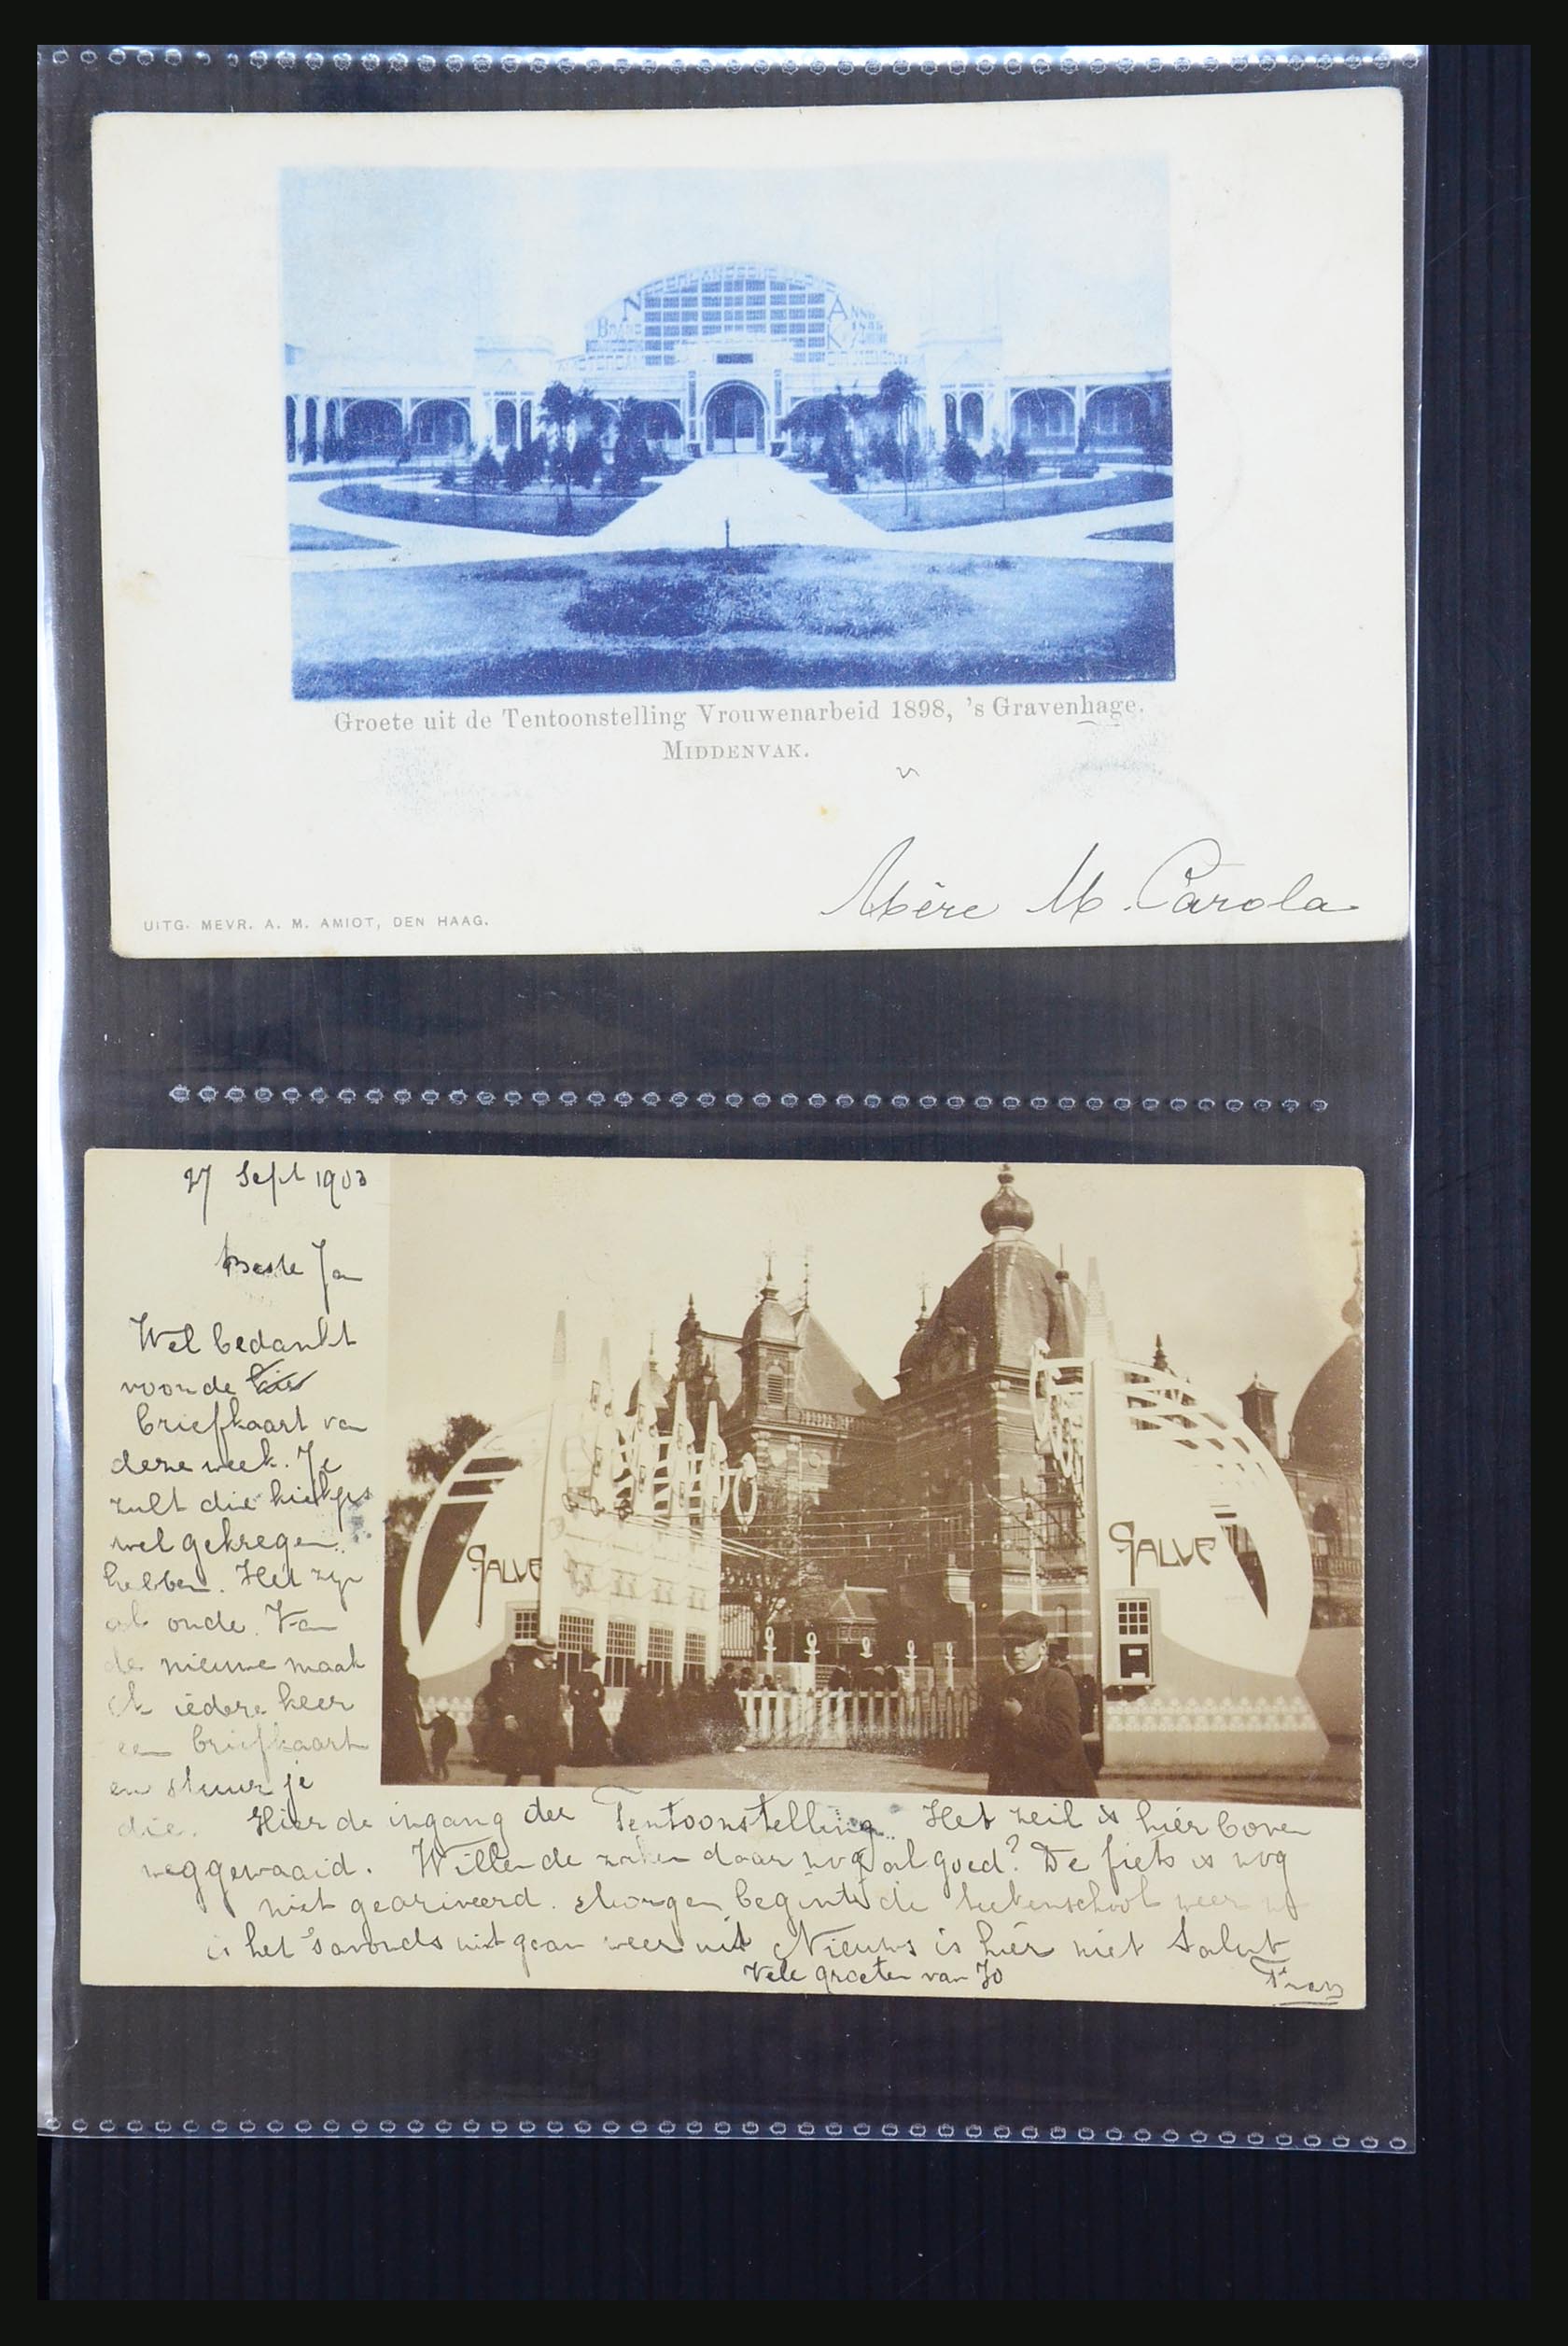 31338 031 - 31338 Netherlands picture postcards 1897-1914.